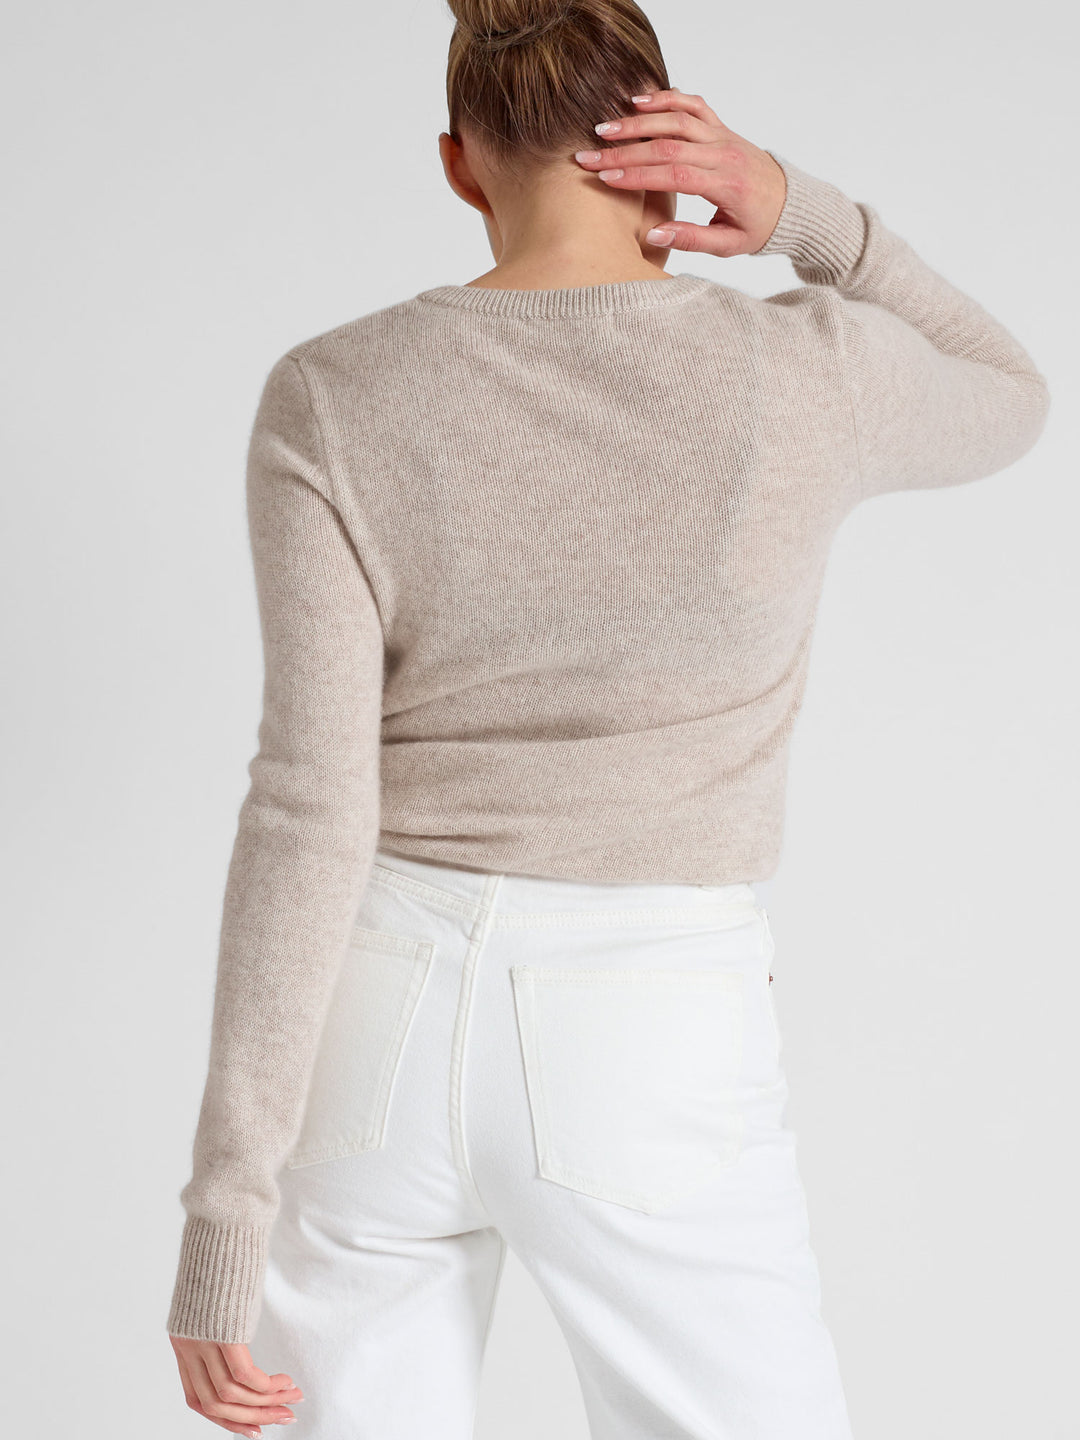 Cashmere sweater round neck "Saga" in 100% pure cashmere. Scandinavian design by Kashmina.  Color: Beige.